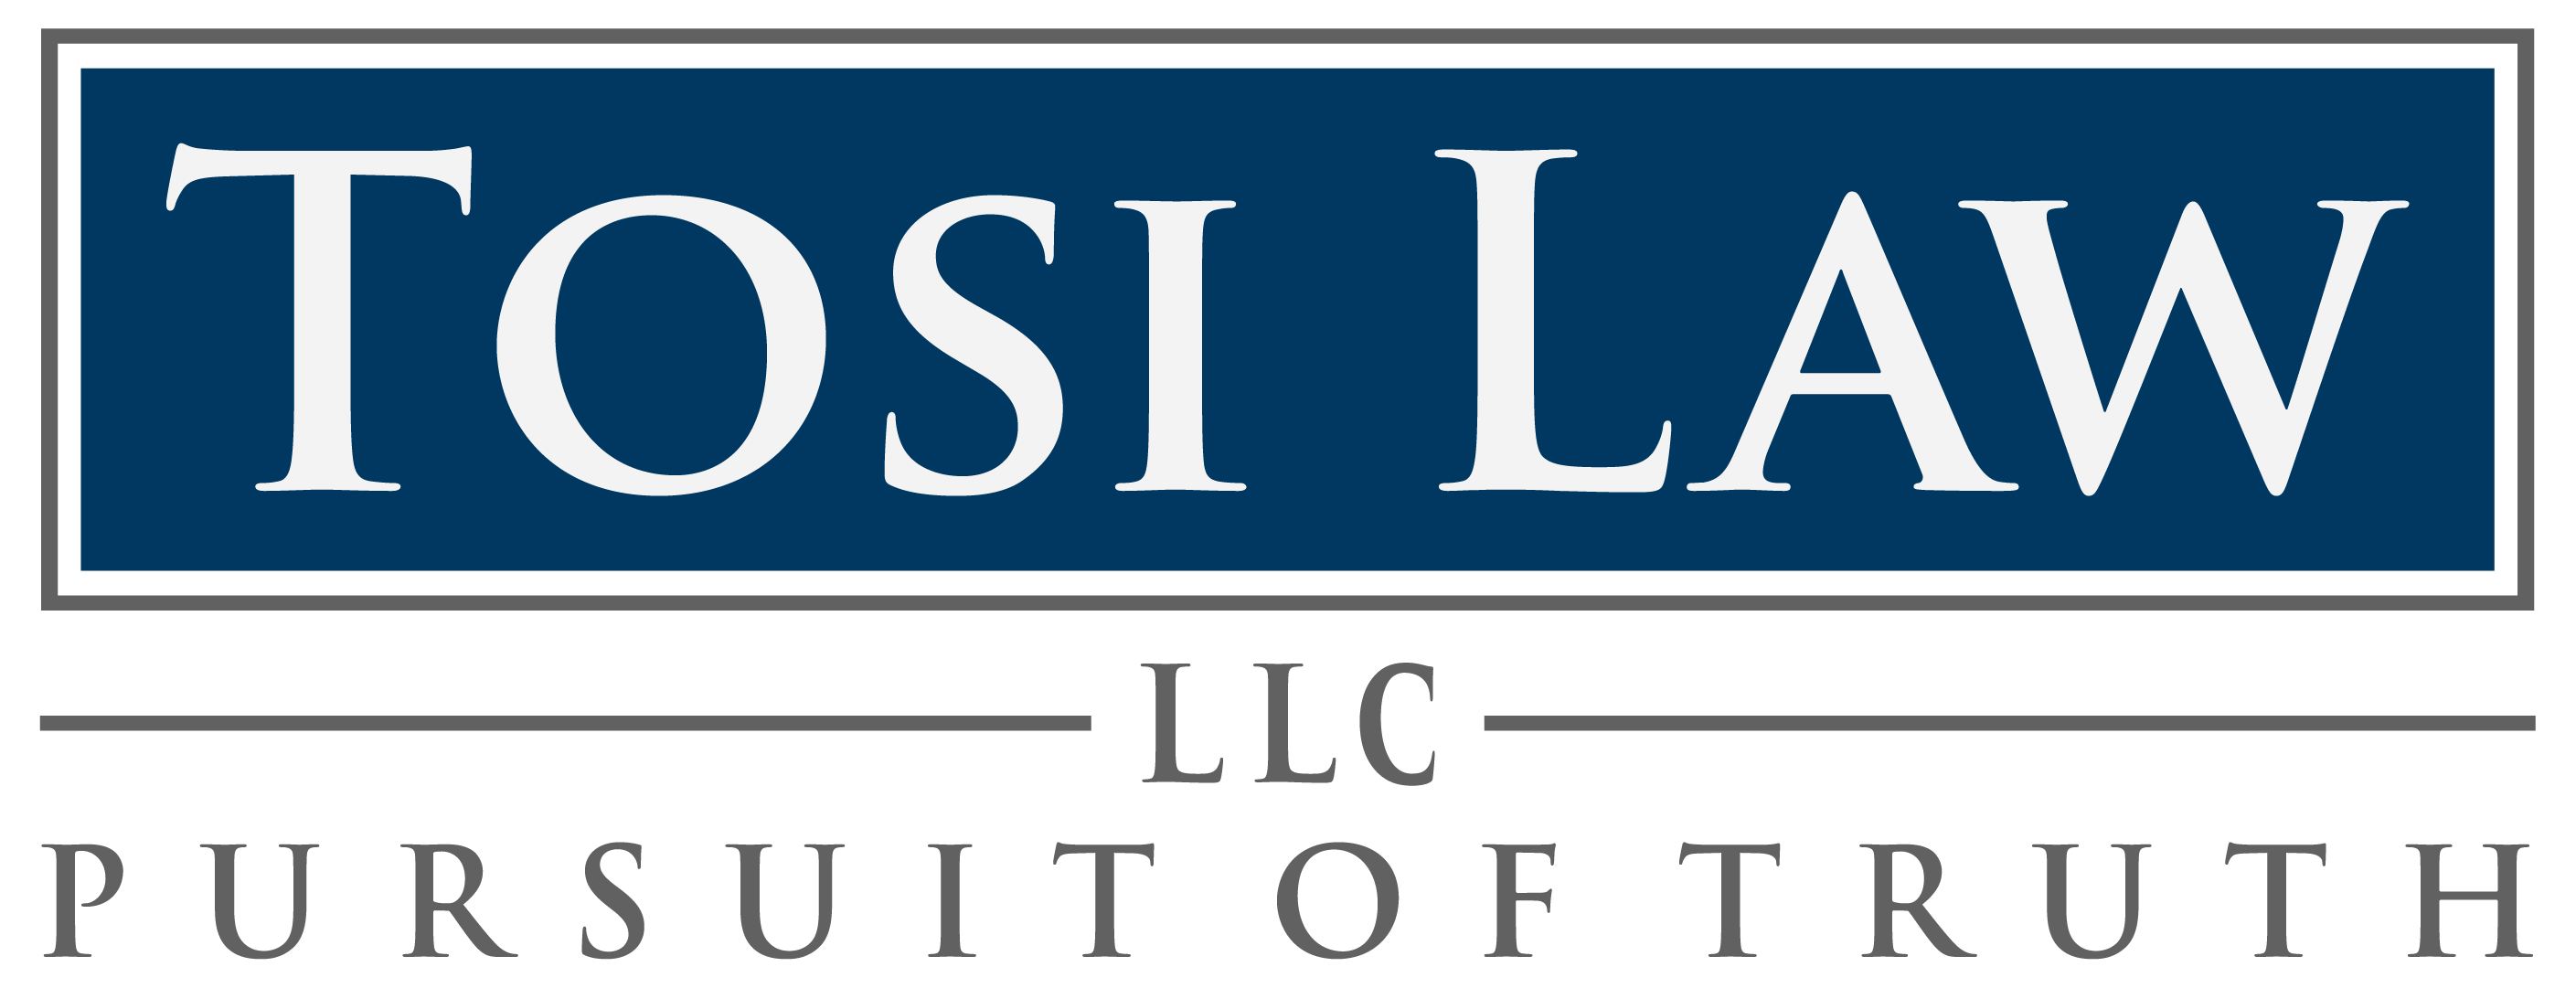 Tosi Law Logo_All 4_Tosi Law (Blue)_LLC